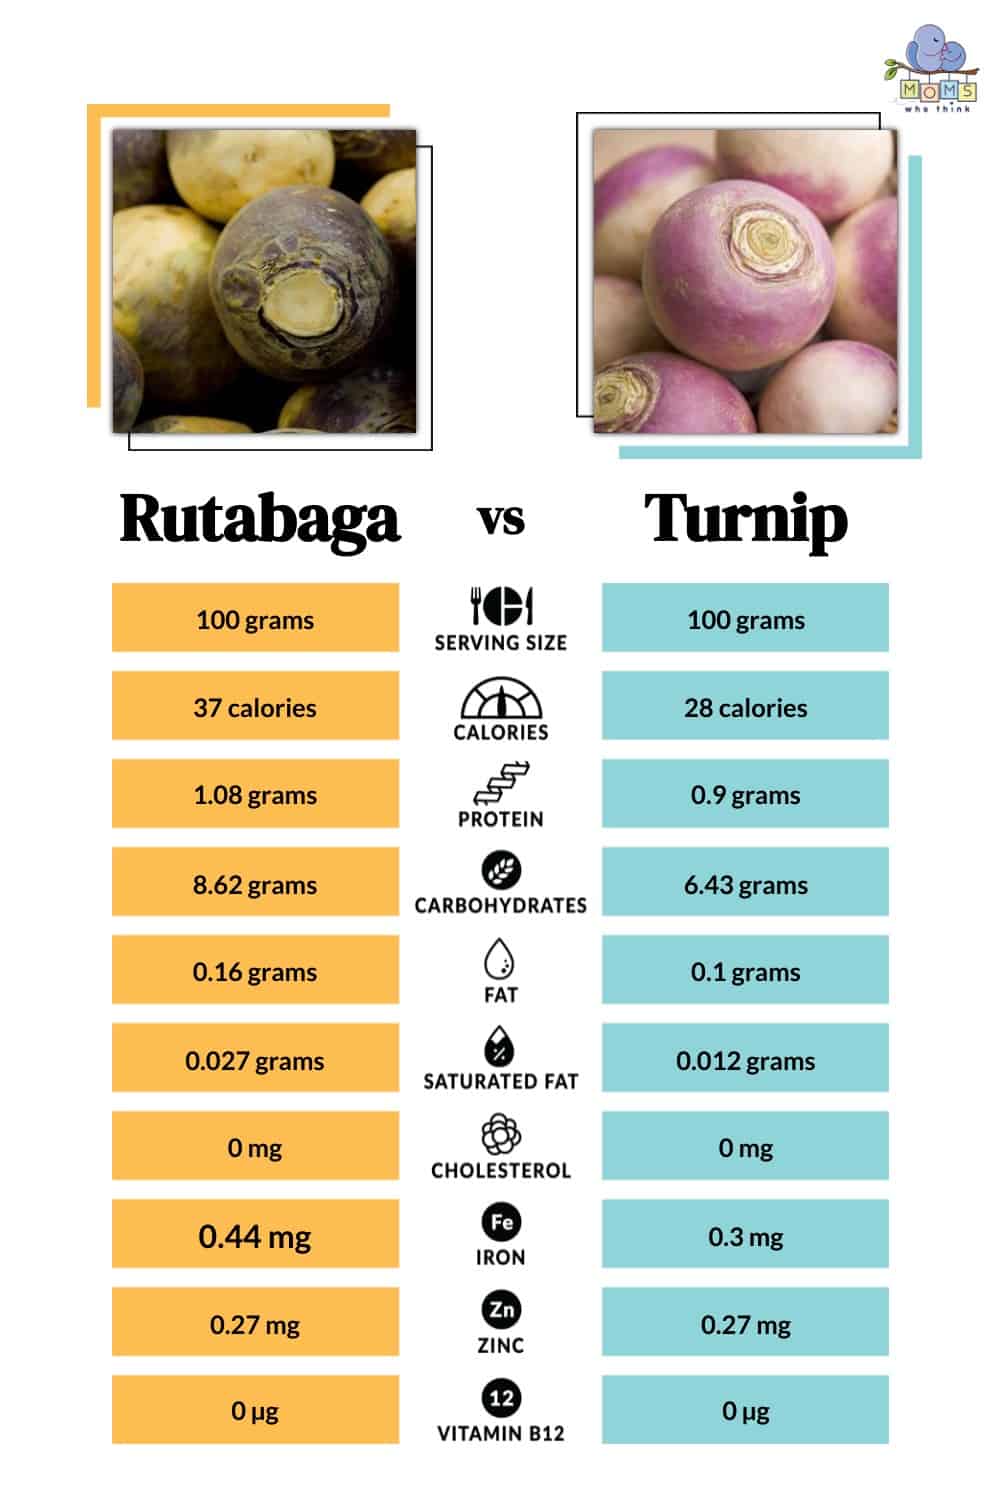 Rutabaga vs Turnip Nutritional Facts